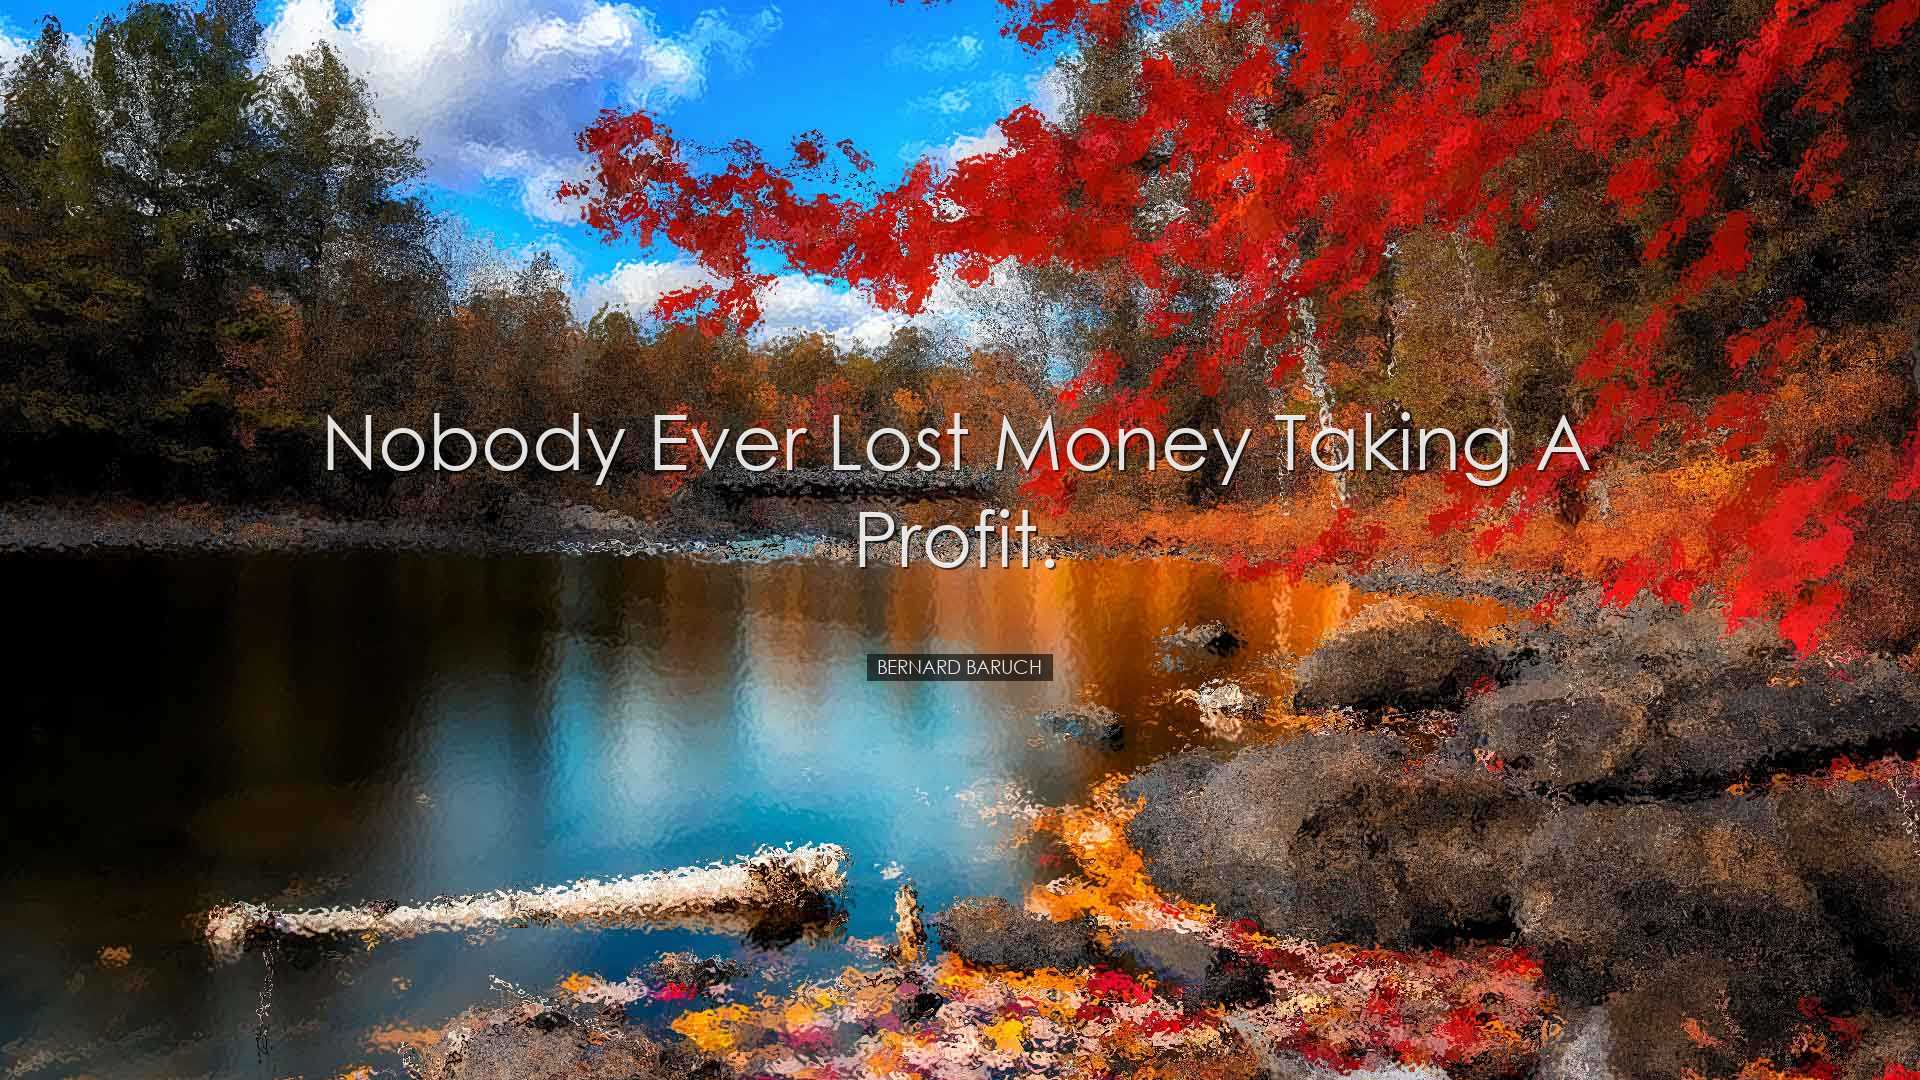 Nobody ever lost money taking a profit. - Bernard Baruch